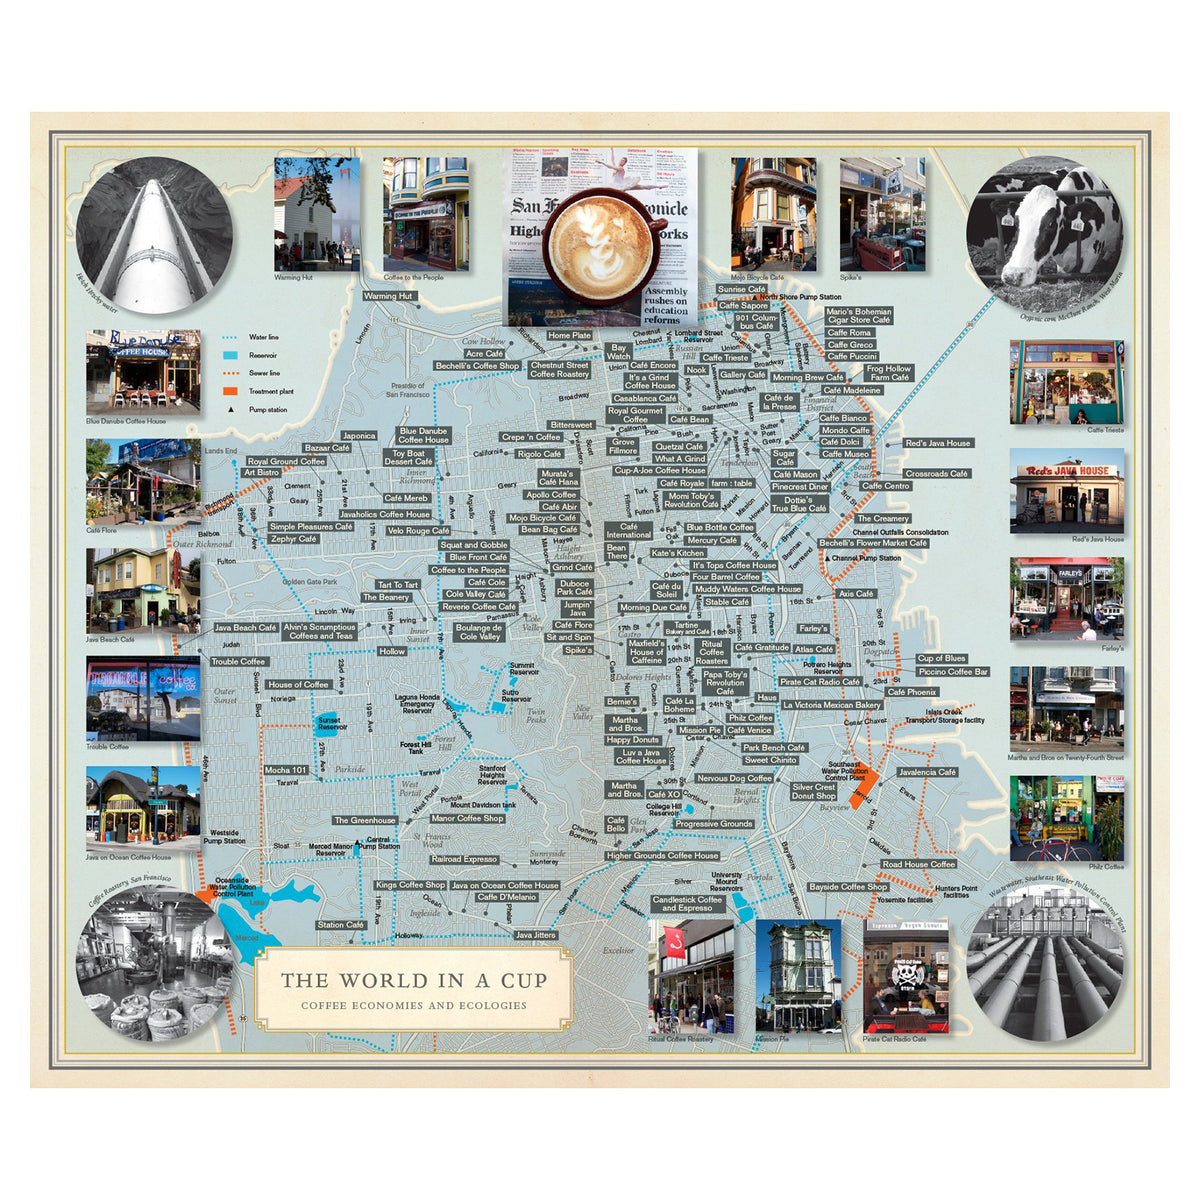 Infinite City: A San Francisco Atlas&#39; city map page.